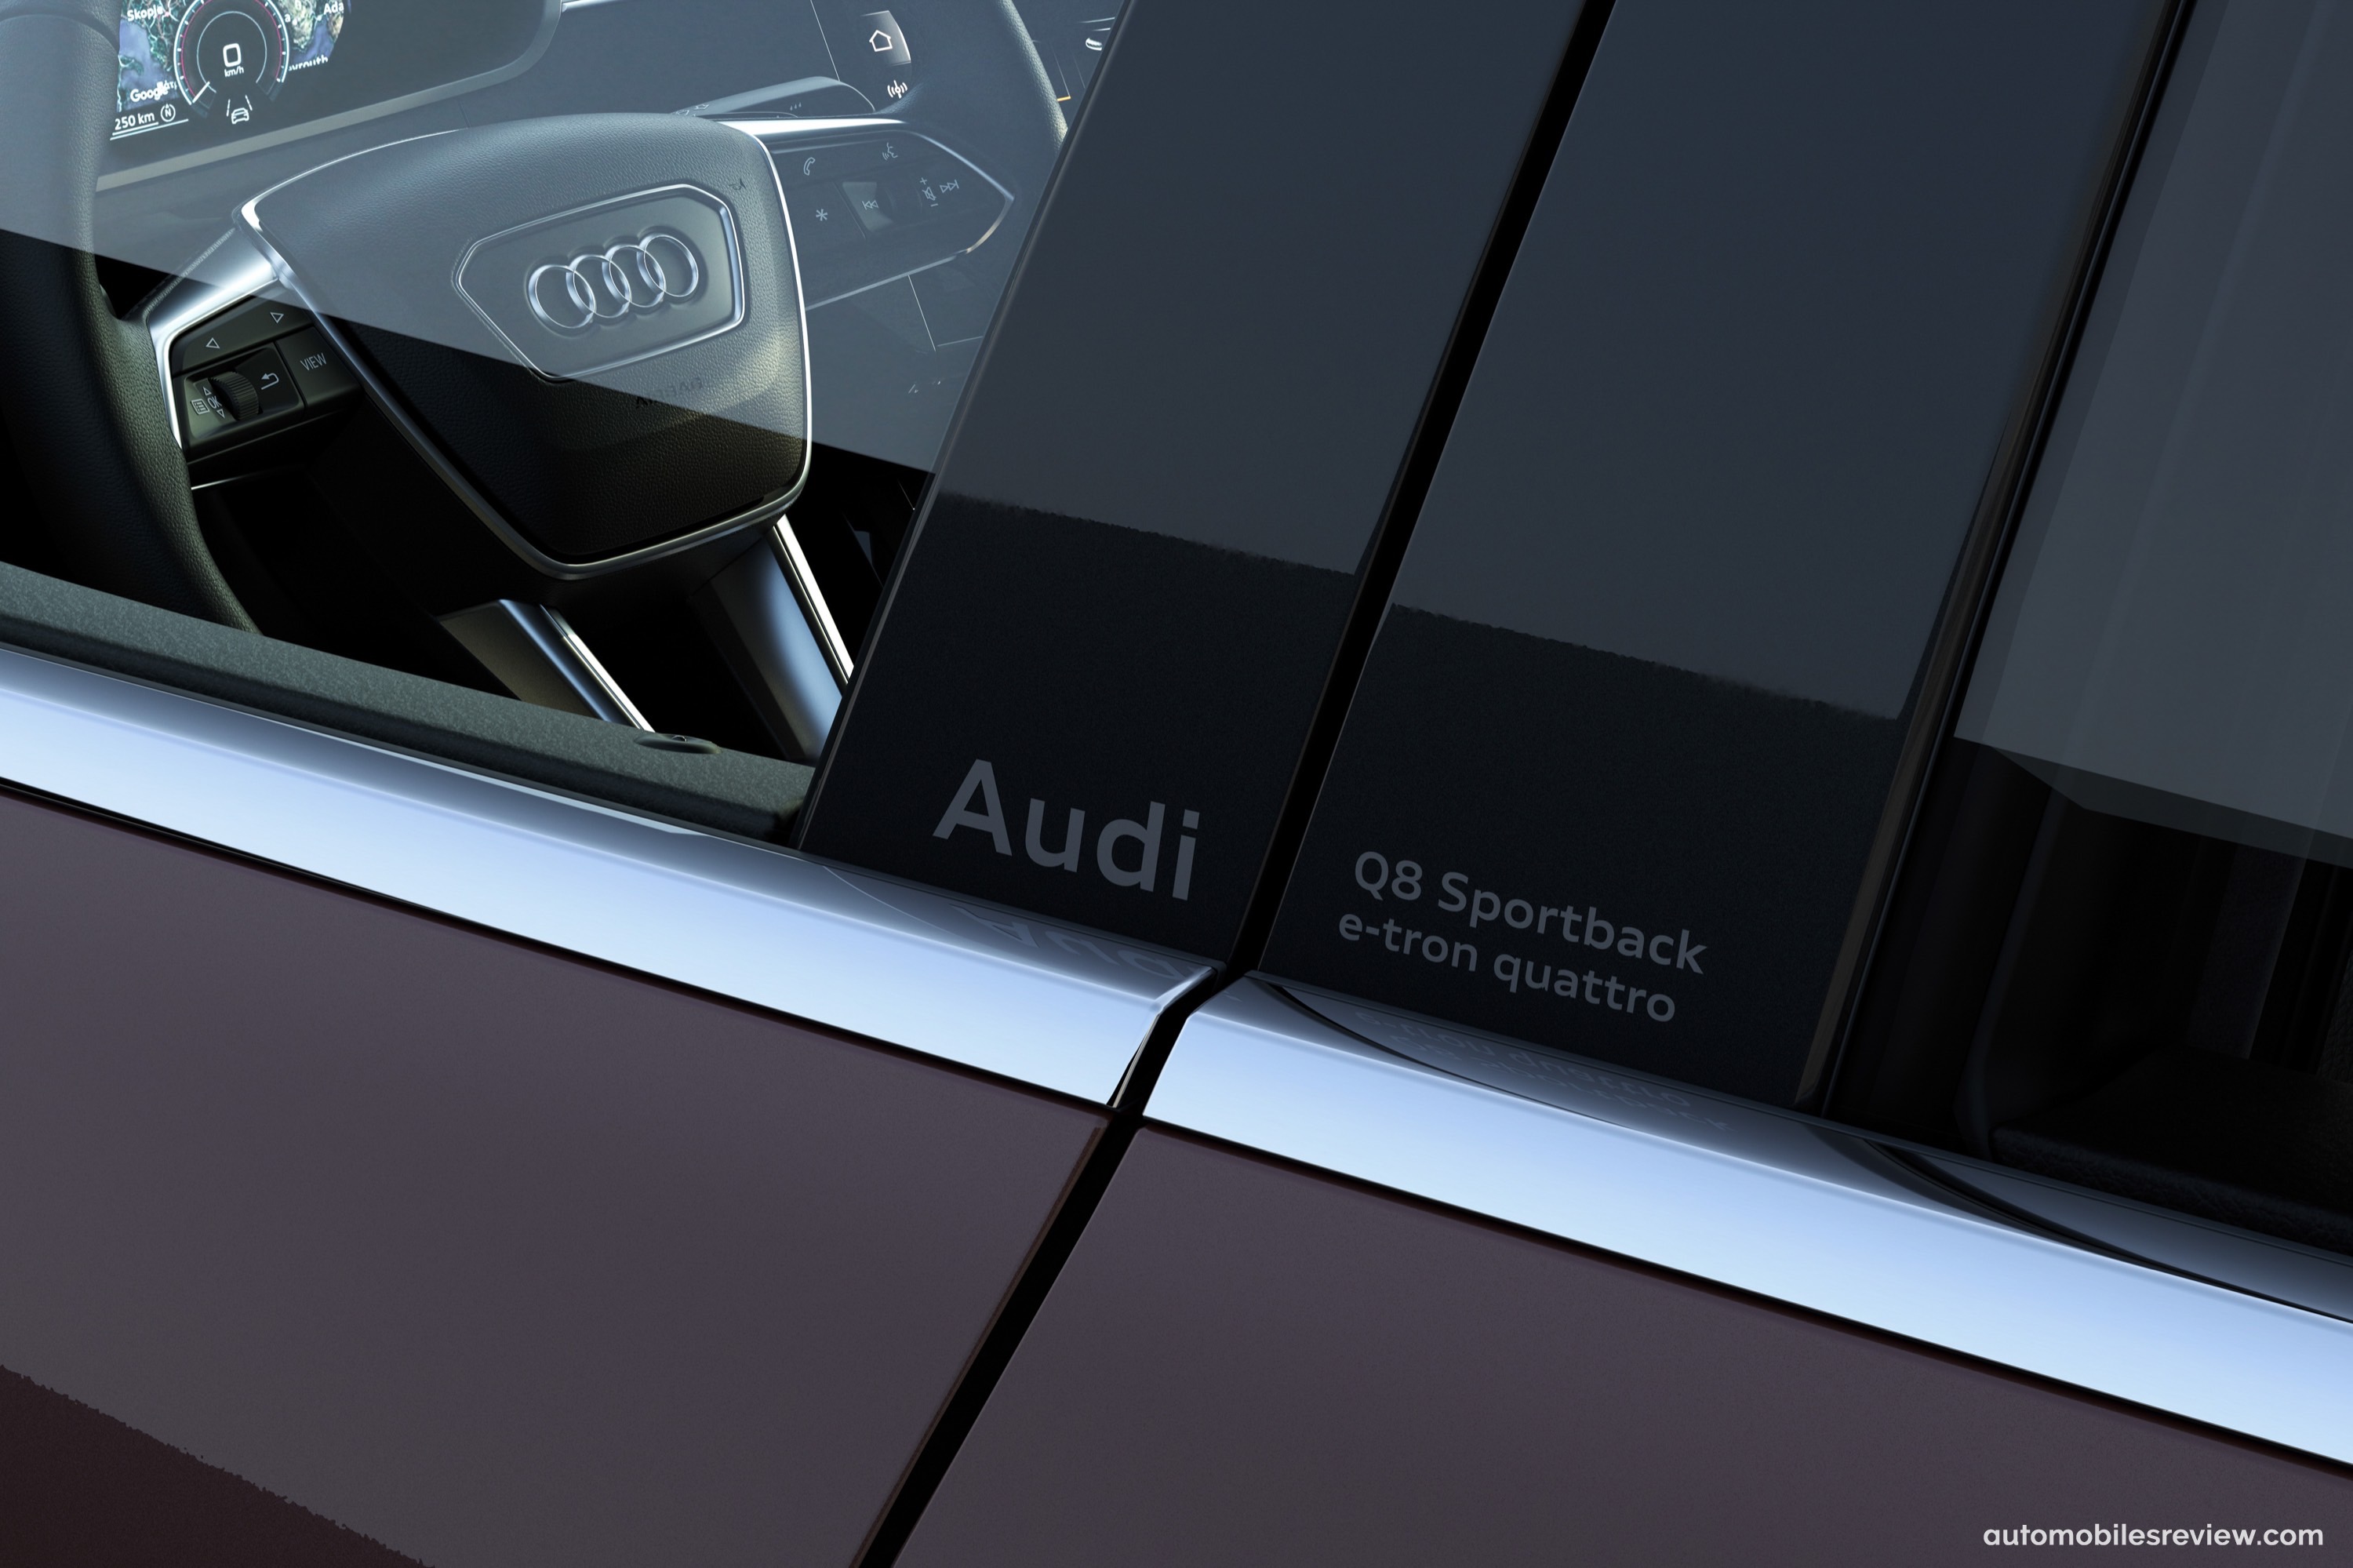 Audi Q8 Sportback e-tron quattro